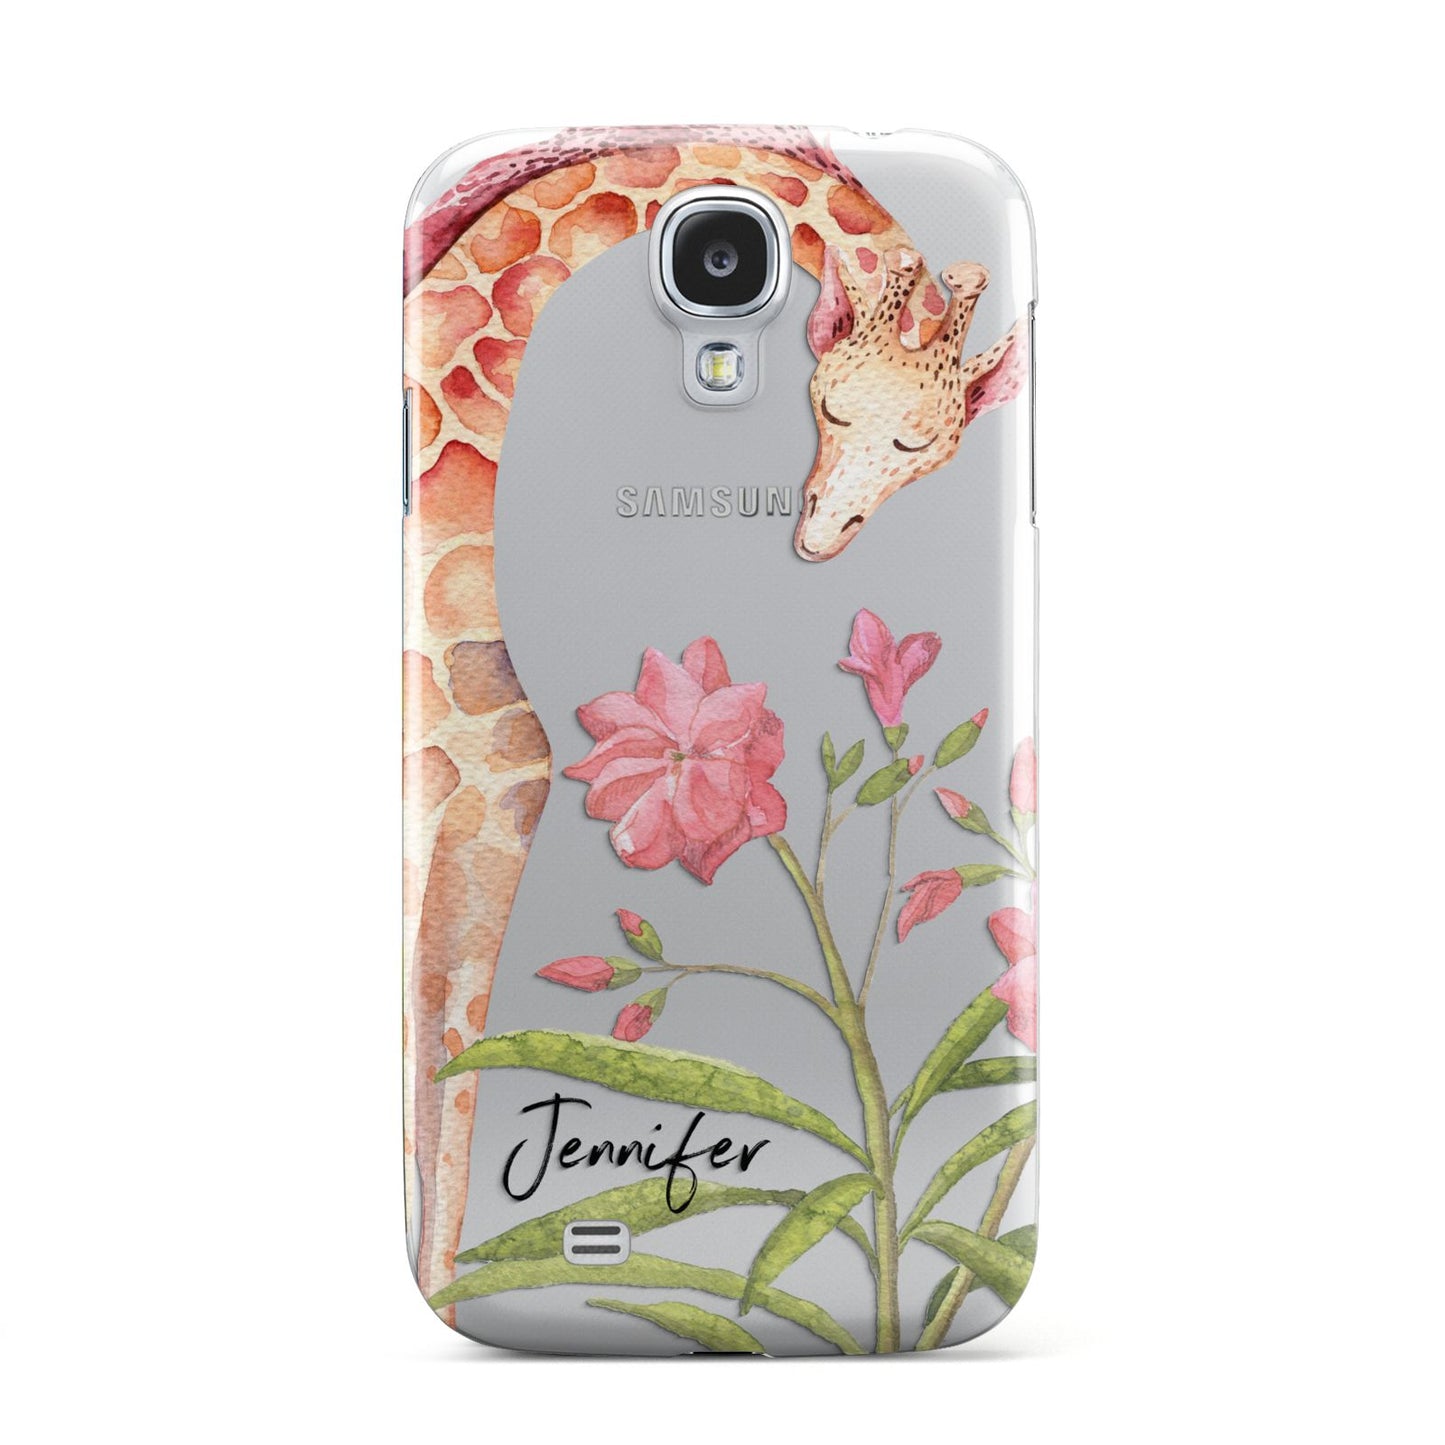 Personalised Giraffe Samsung Galaxy S4 Case